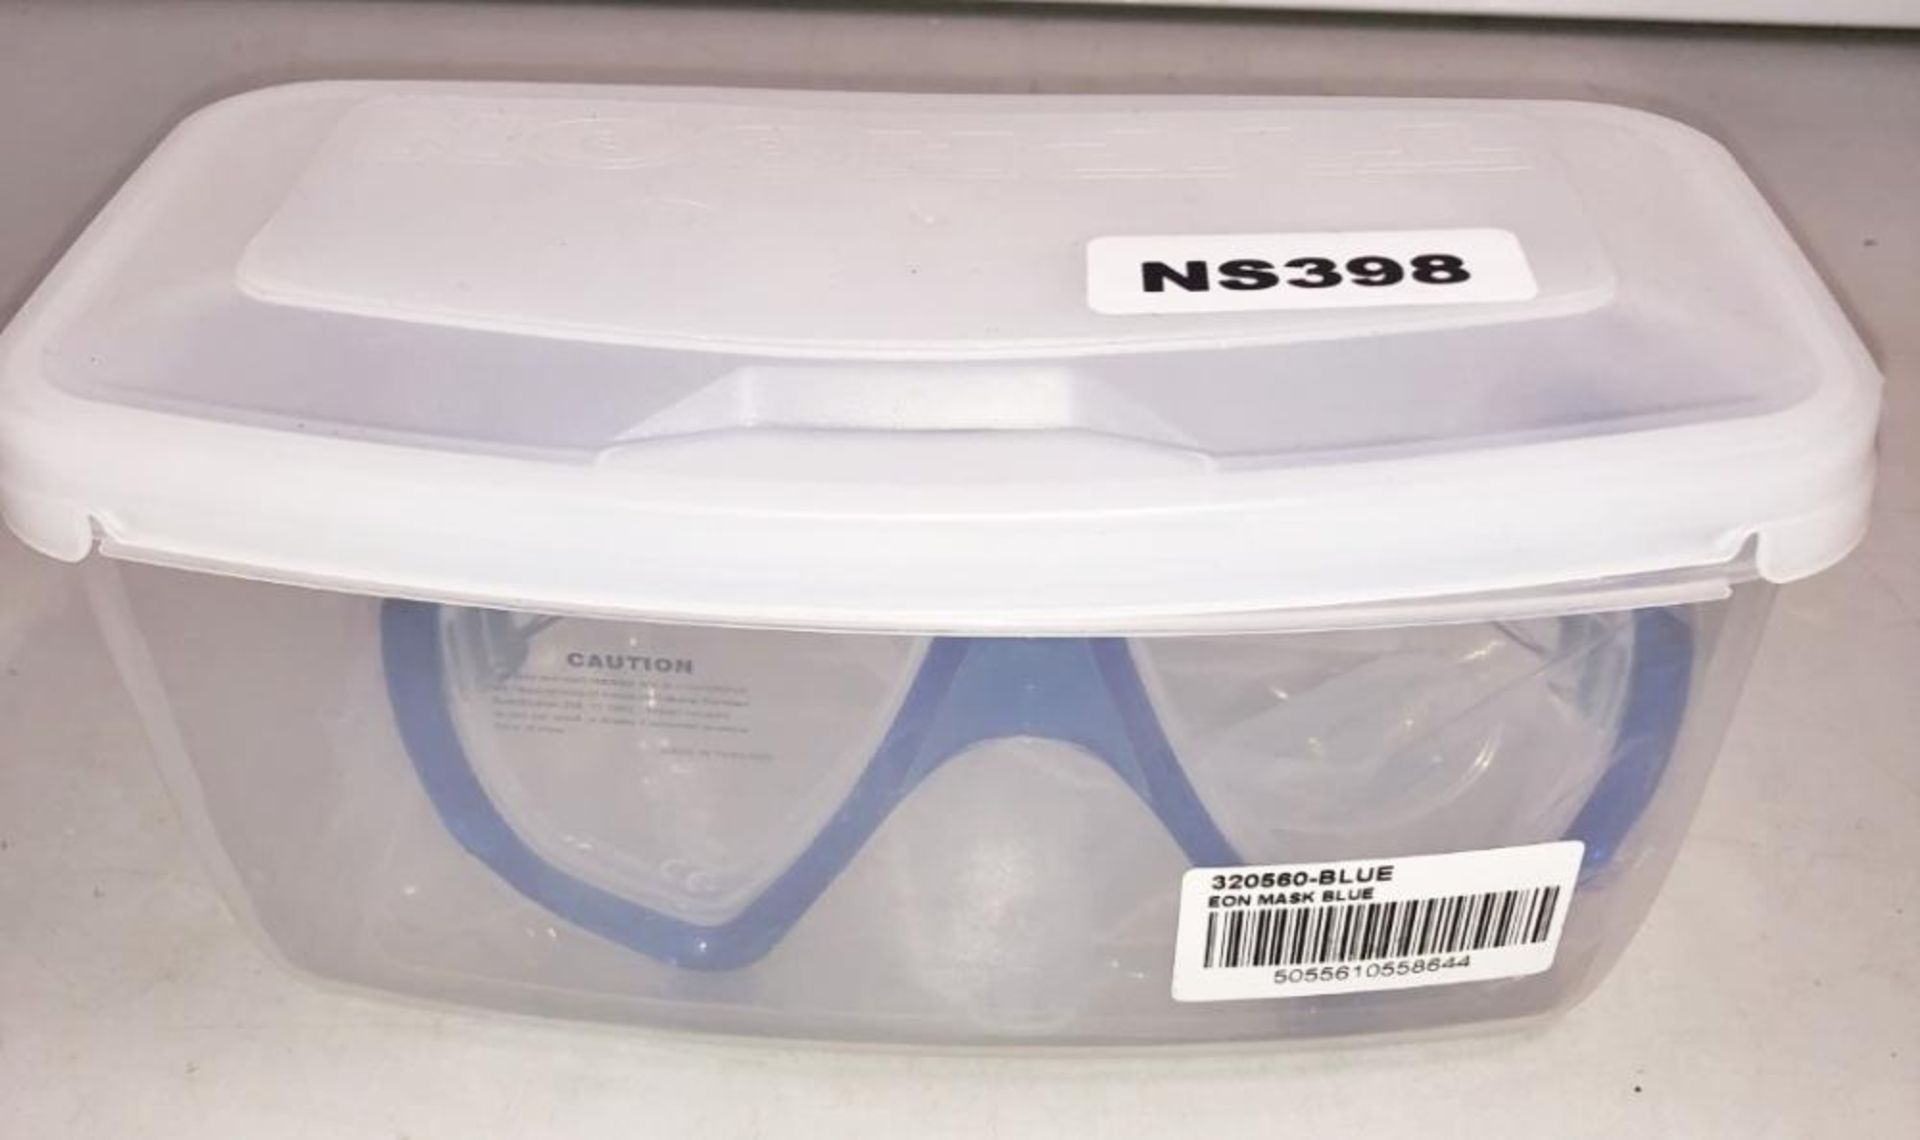 8 x New Pairs Of Branded Diving Masks - Ref: NS397, NS398, NS399, NS400, NS401, NS402, NS403, NS404 - Image 5 of 27